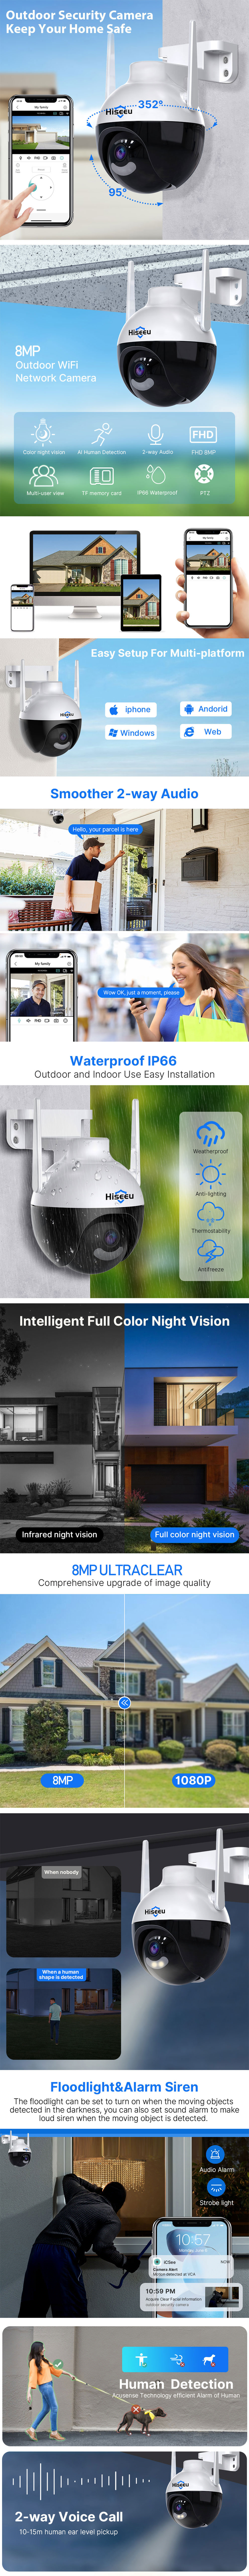 Hiseeu-4K-8MP-WiFi-Security-Camera-Outdoor-Intelligent-PTZ-2-way-Audio-Cam-Night-Vision-AI-Human-Det-1975993-1